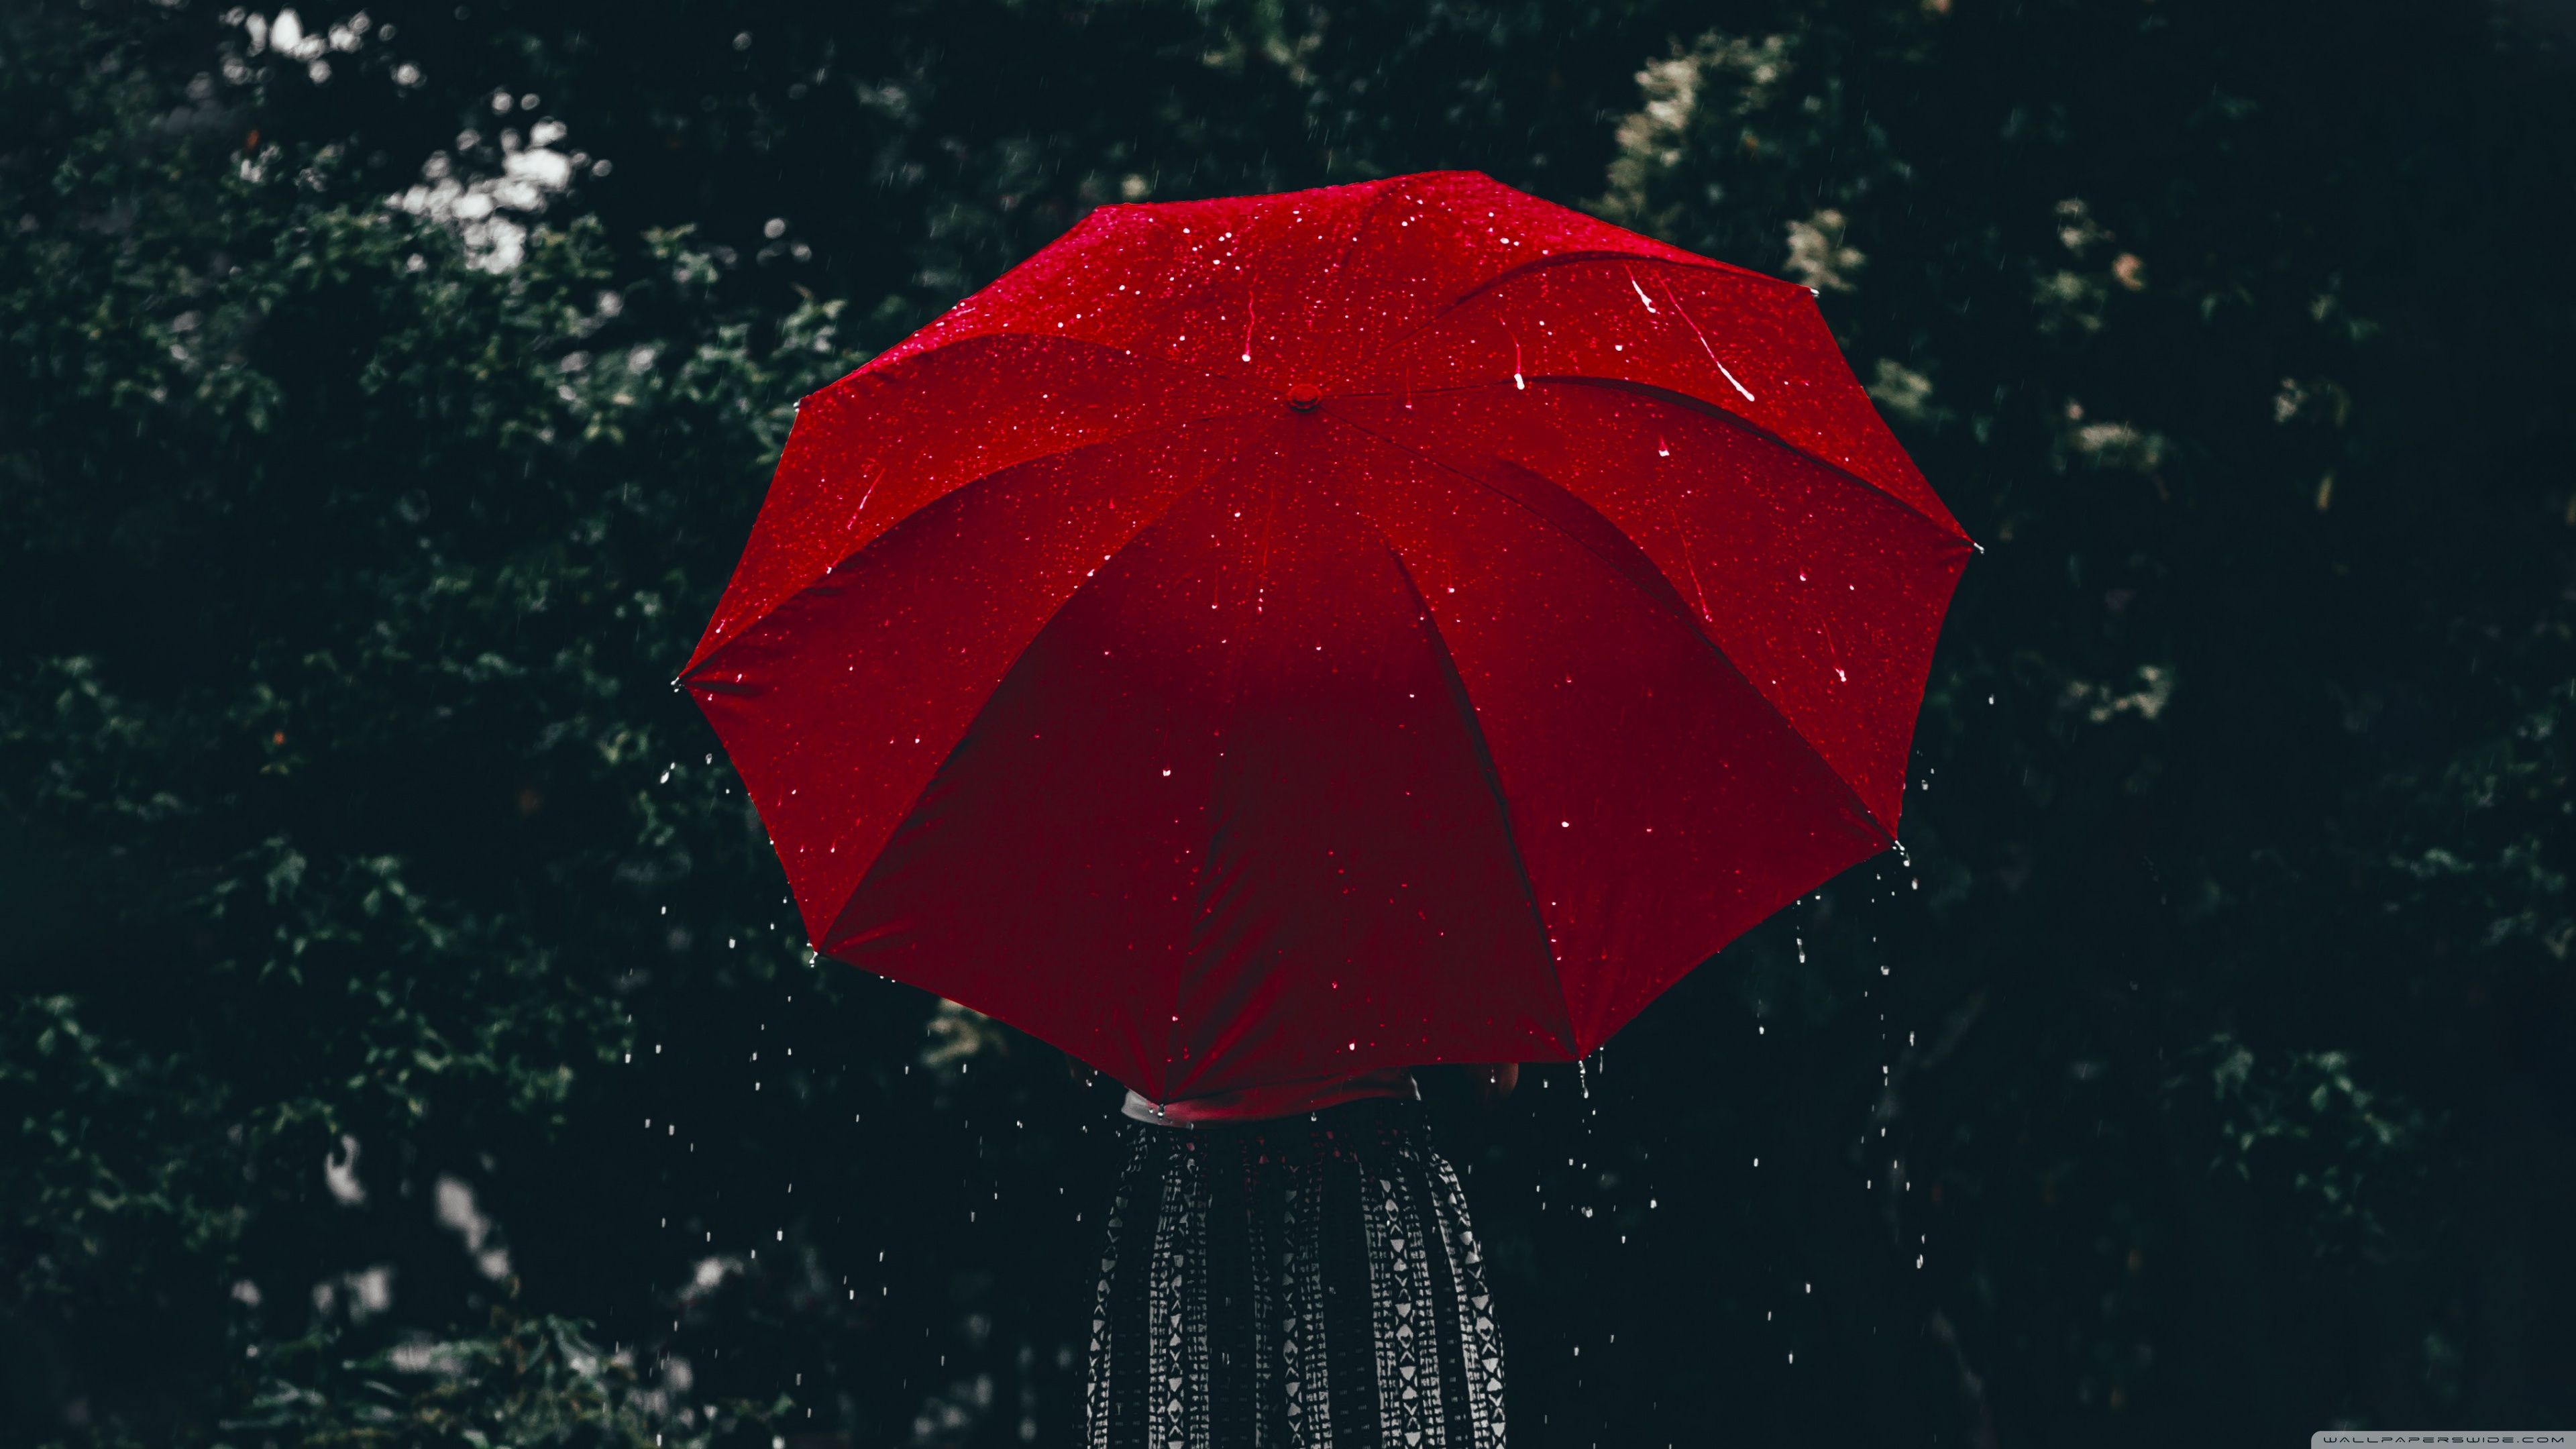 Woman, Red Umbrella, Rain Ultra HD Desktop Background Wallpaper for 4K UHD TV, Tablet